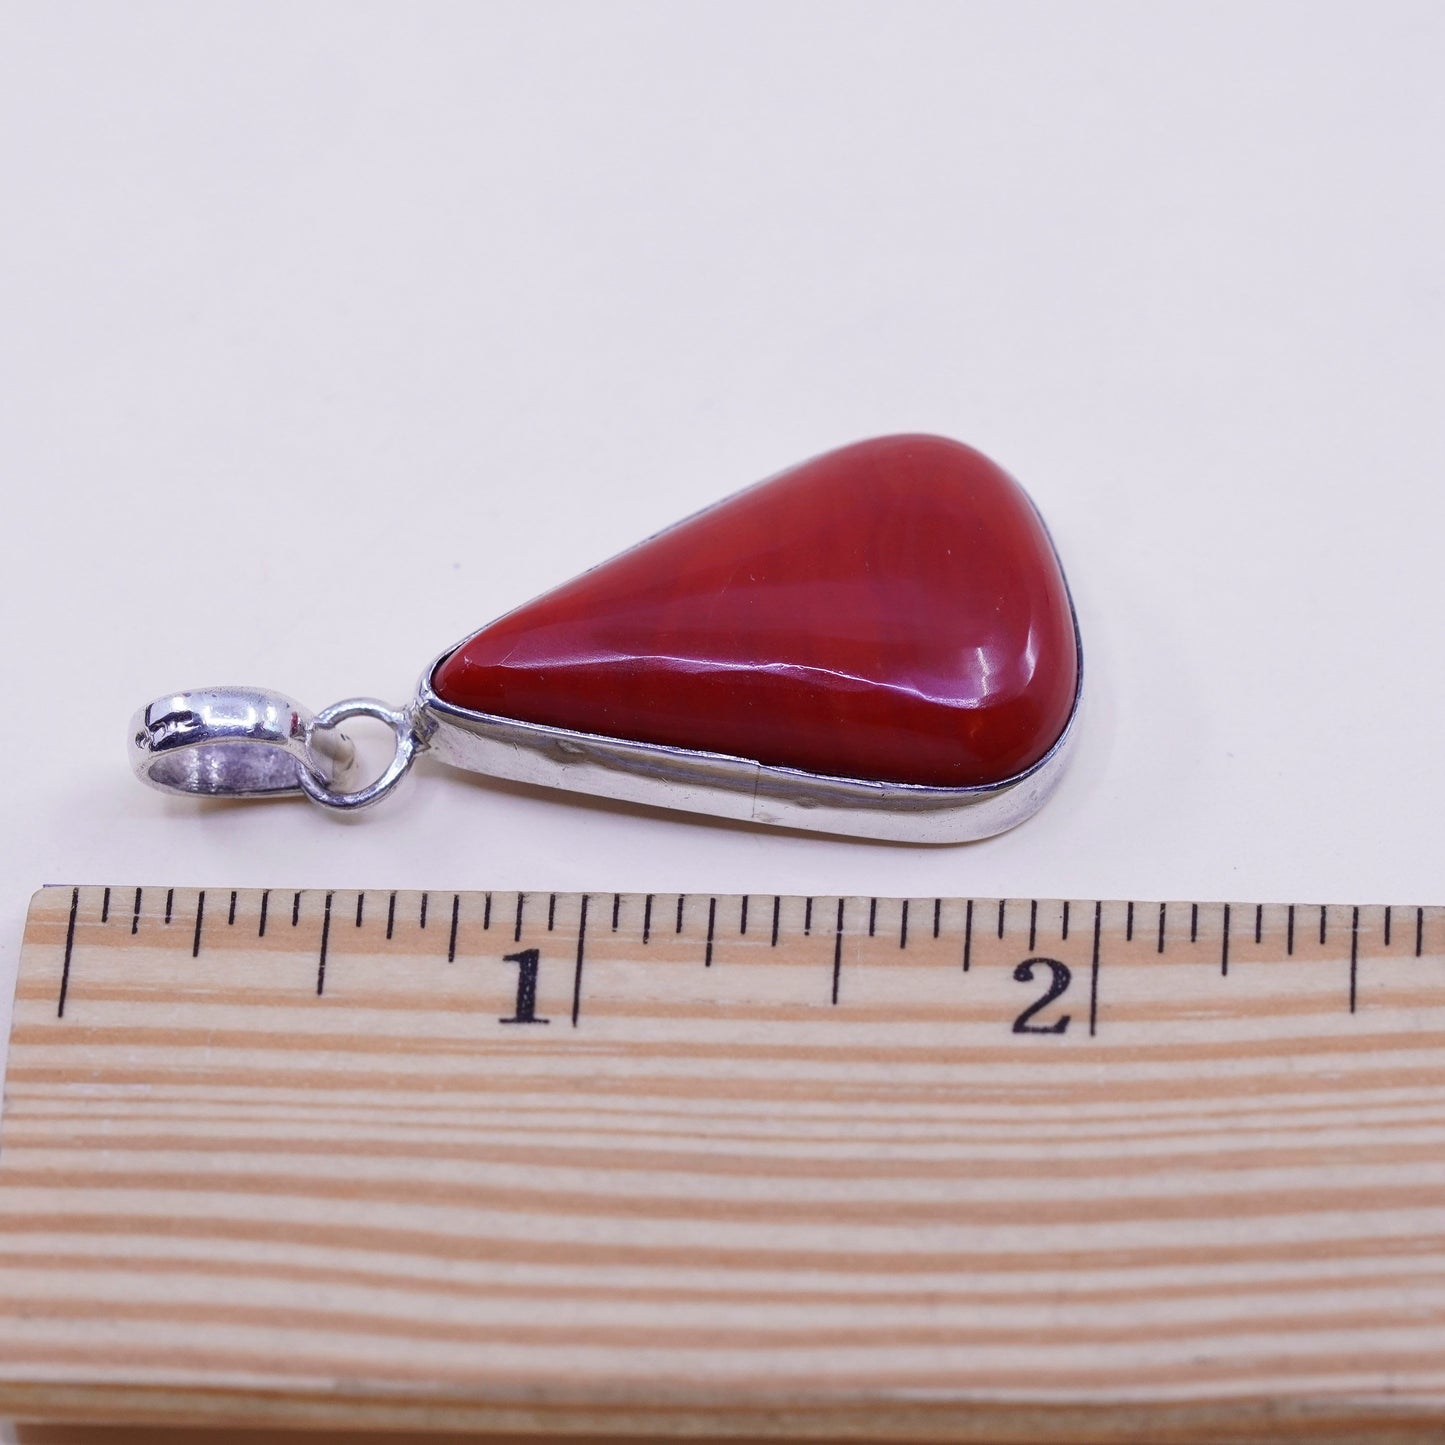 Vintage sterling 925 silver handmade pendant with red jasper